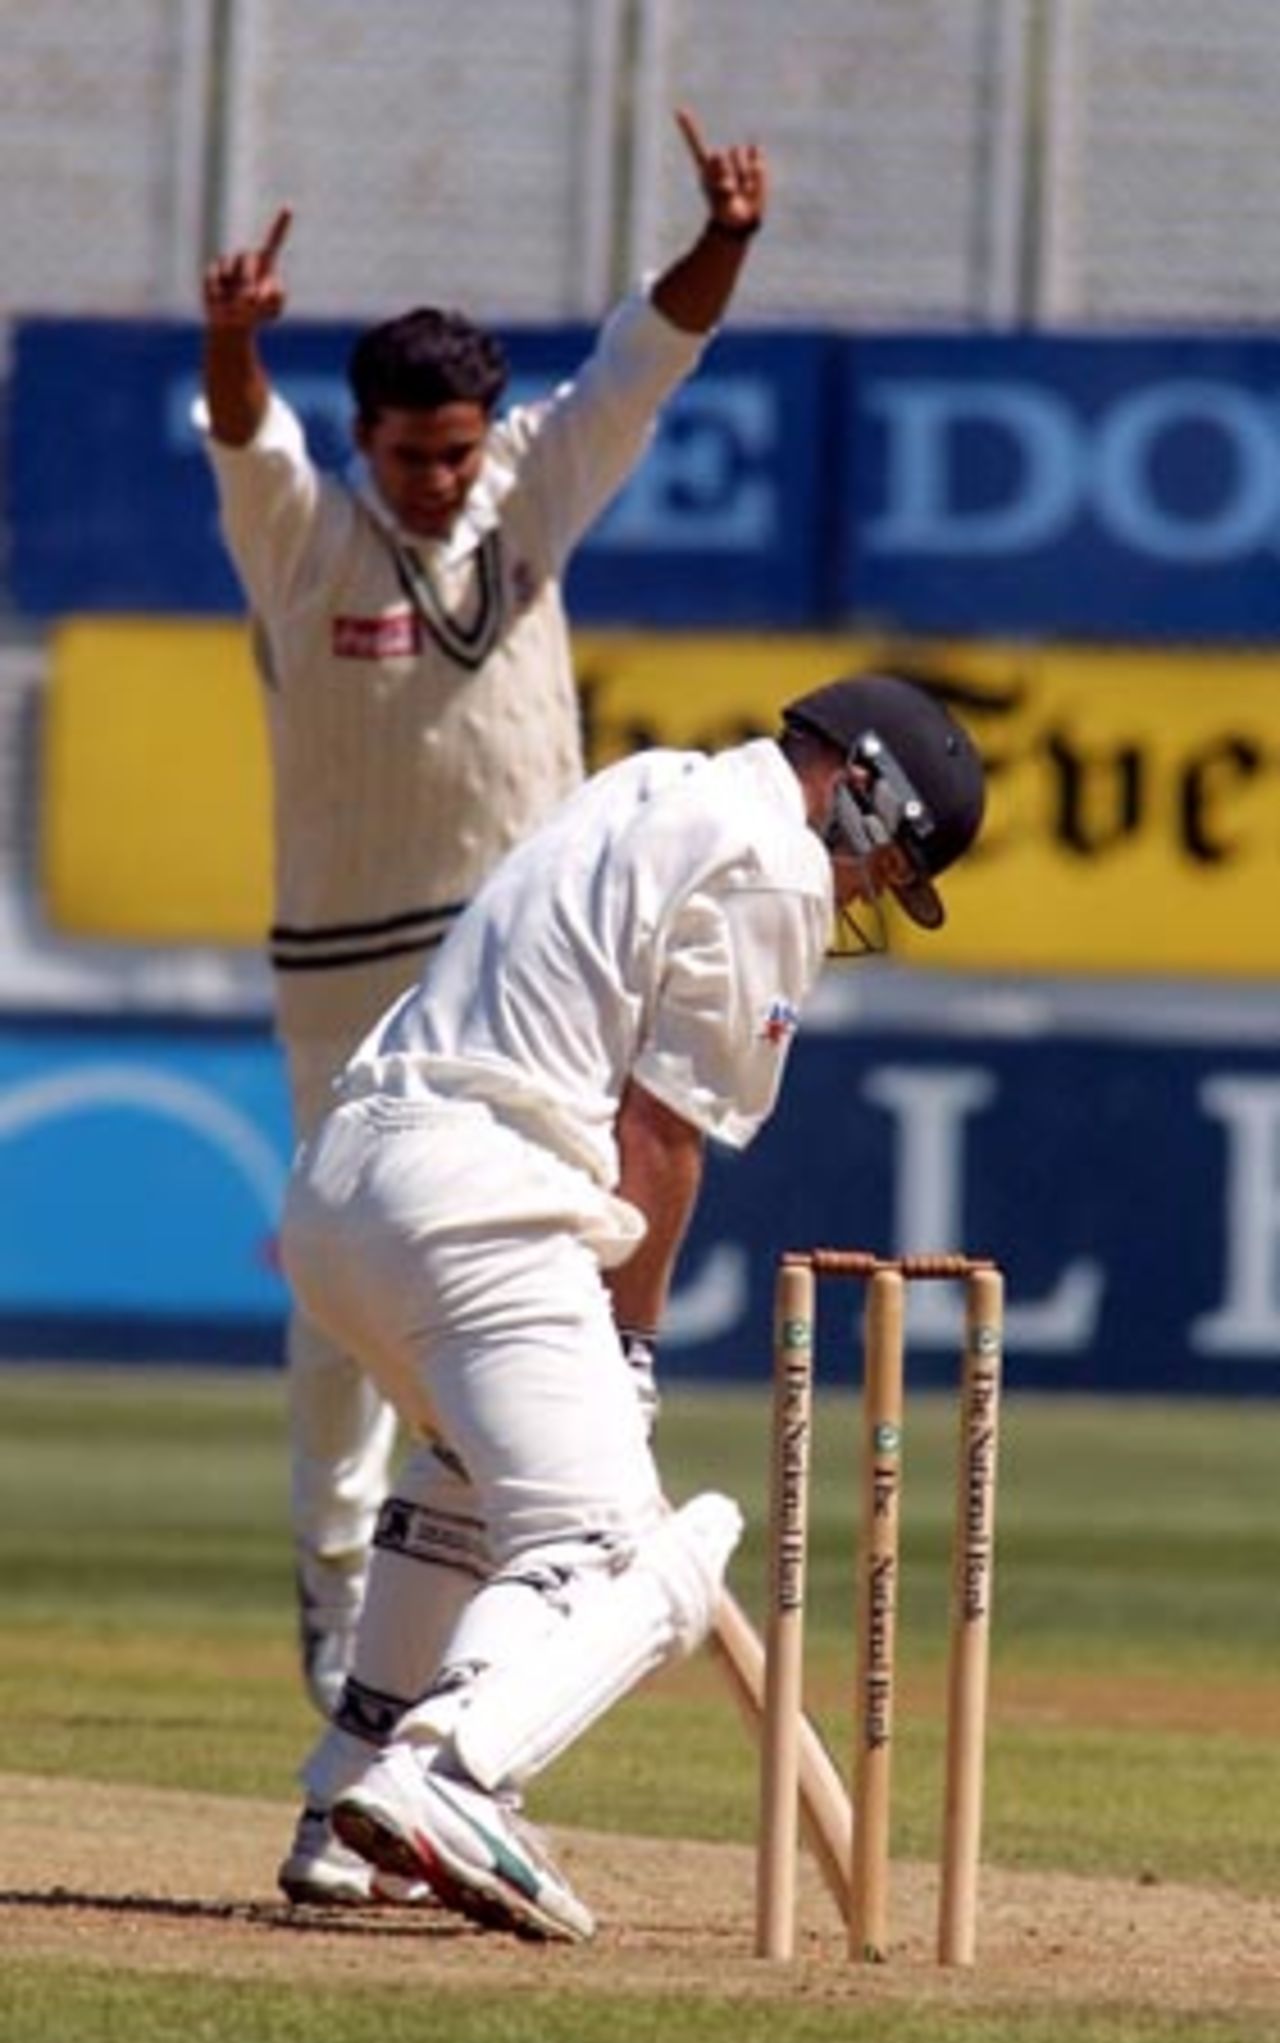 Bangladesh bowler Mashrafe Mortaza (rear) celebrates the dismissal of New Zealand batsman Lou Vincent, caught behind by wicket-keeper Khaled Mashud for 23 in his first innings. 2nd Test: New Zealand v Bangladesh at Basin Reserve, Wellington, 26-30 Dec 2001 (29 December 2001).